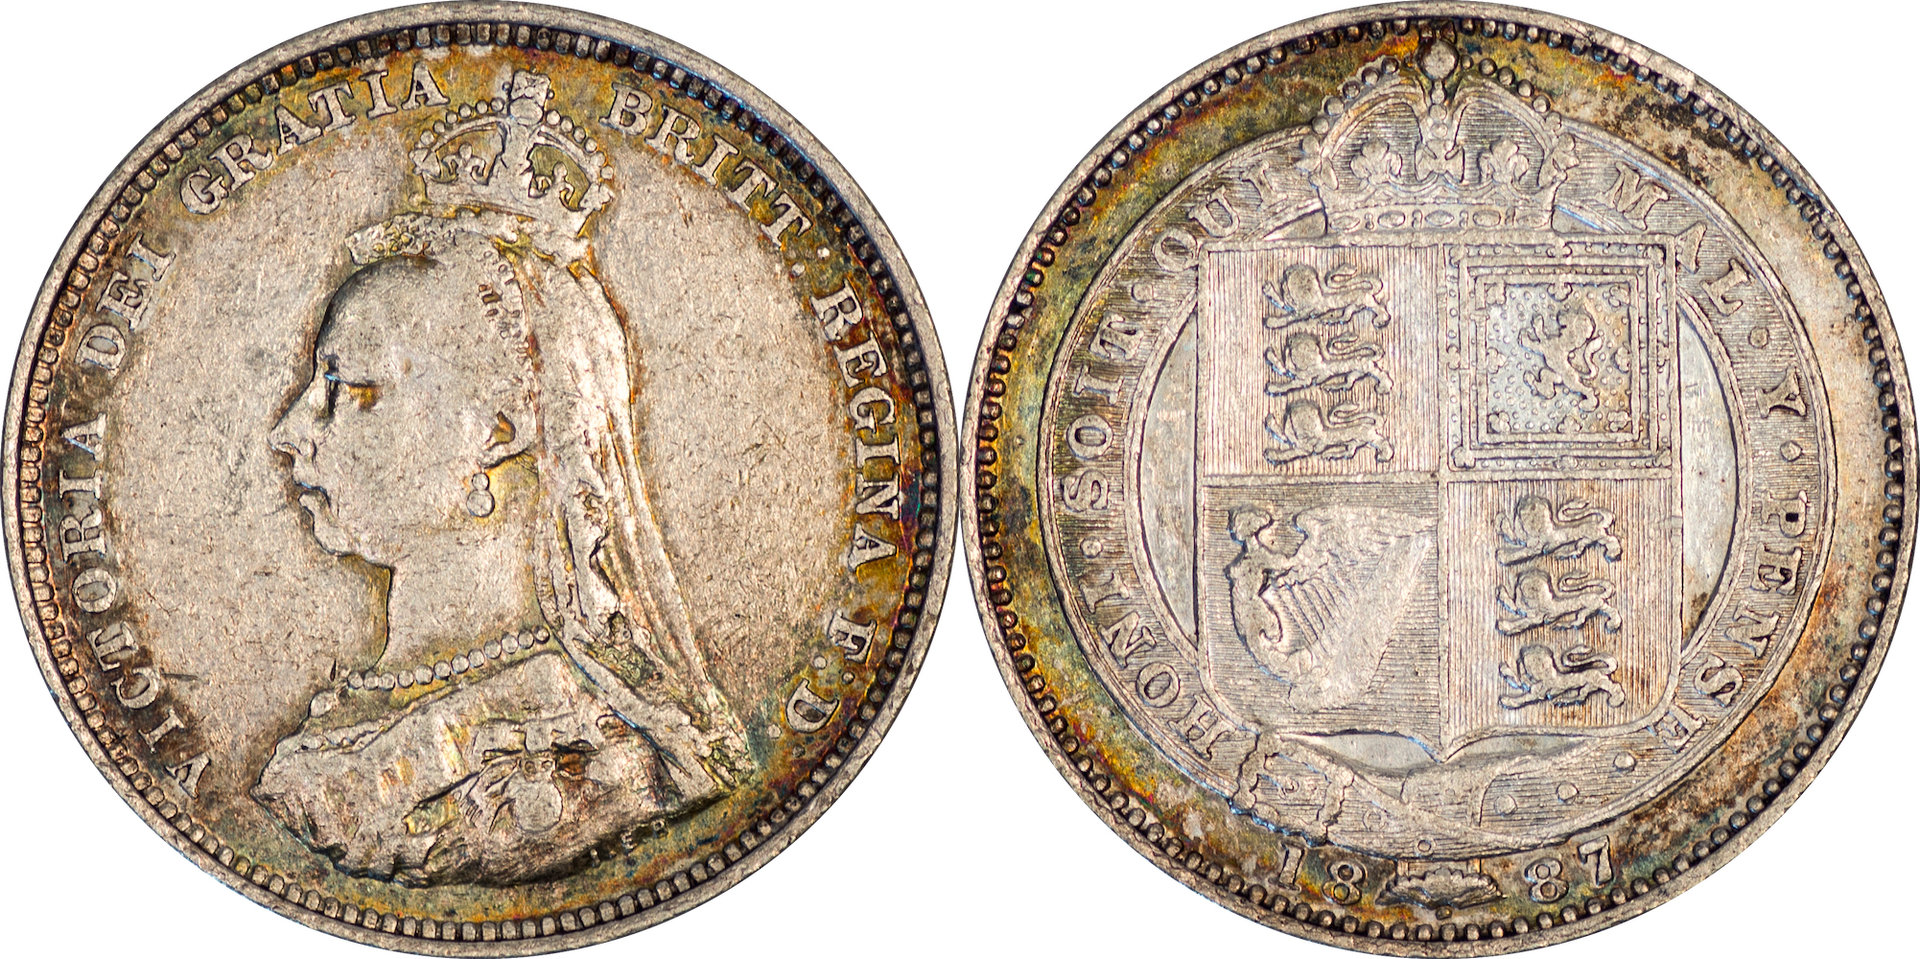 Great Britain - 1887 1 Shilling.jpg